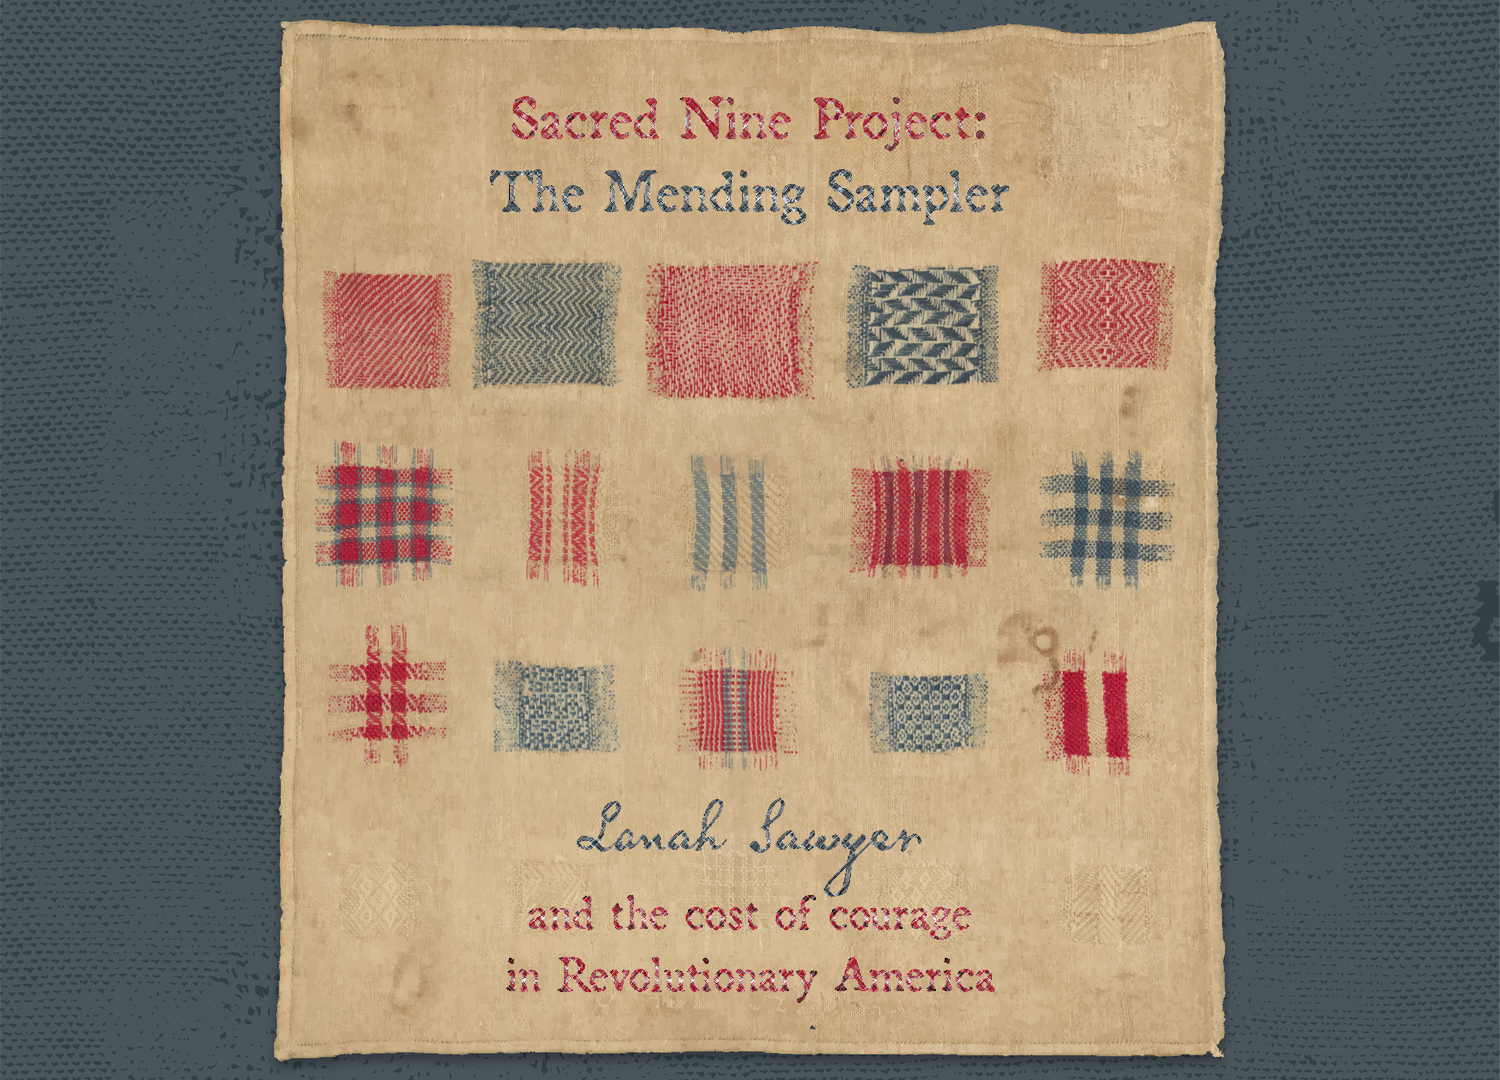 Sacred Nine Project, The mending sampler graphic.